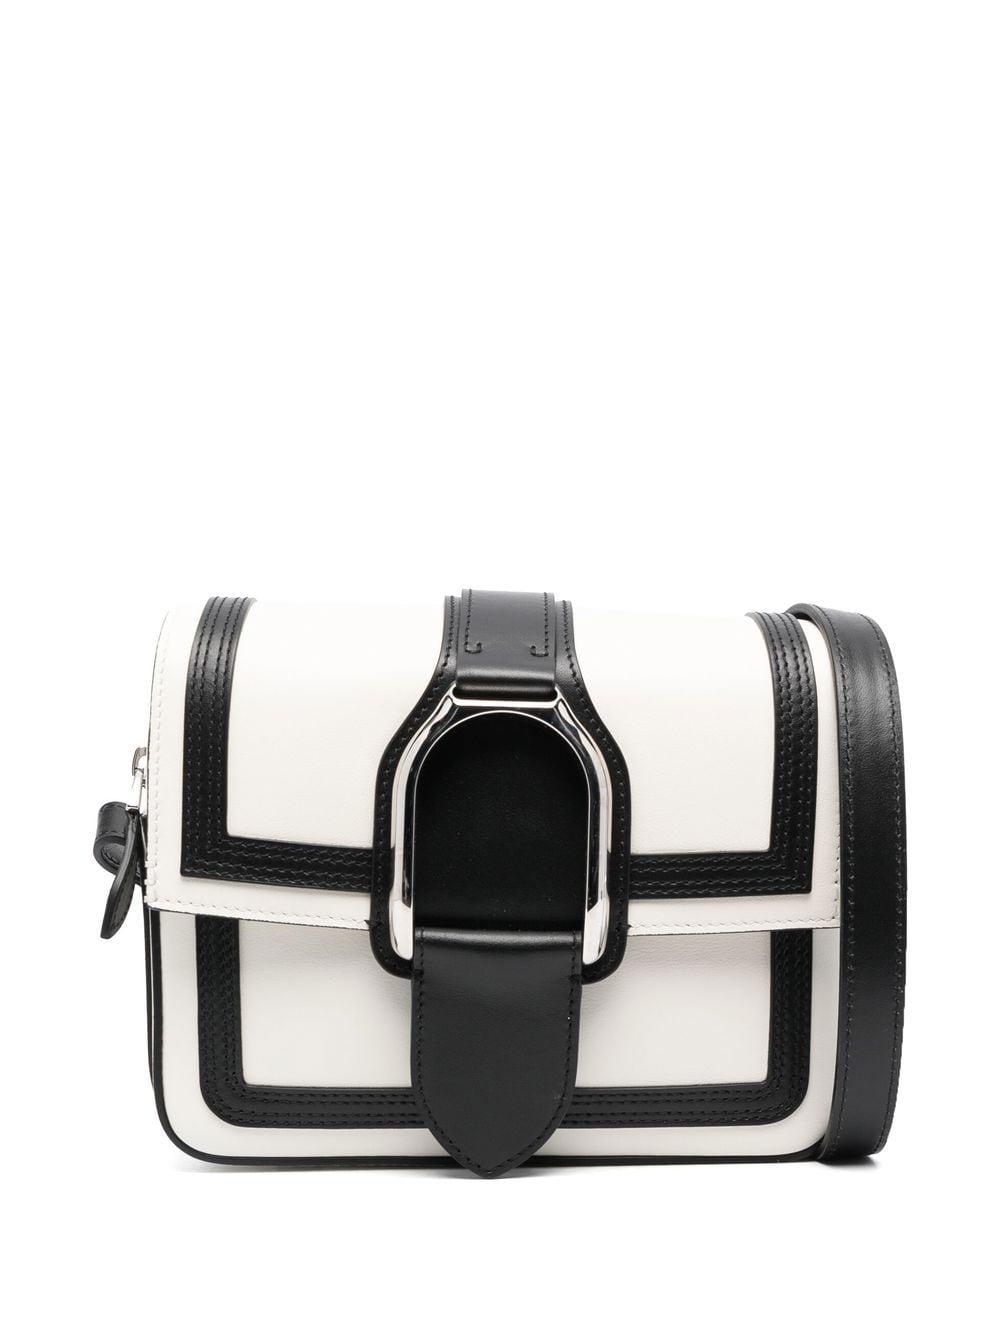 Ralph Lauren Collection Welington Leather Crossbody Bag in Black | Lyst